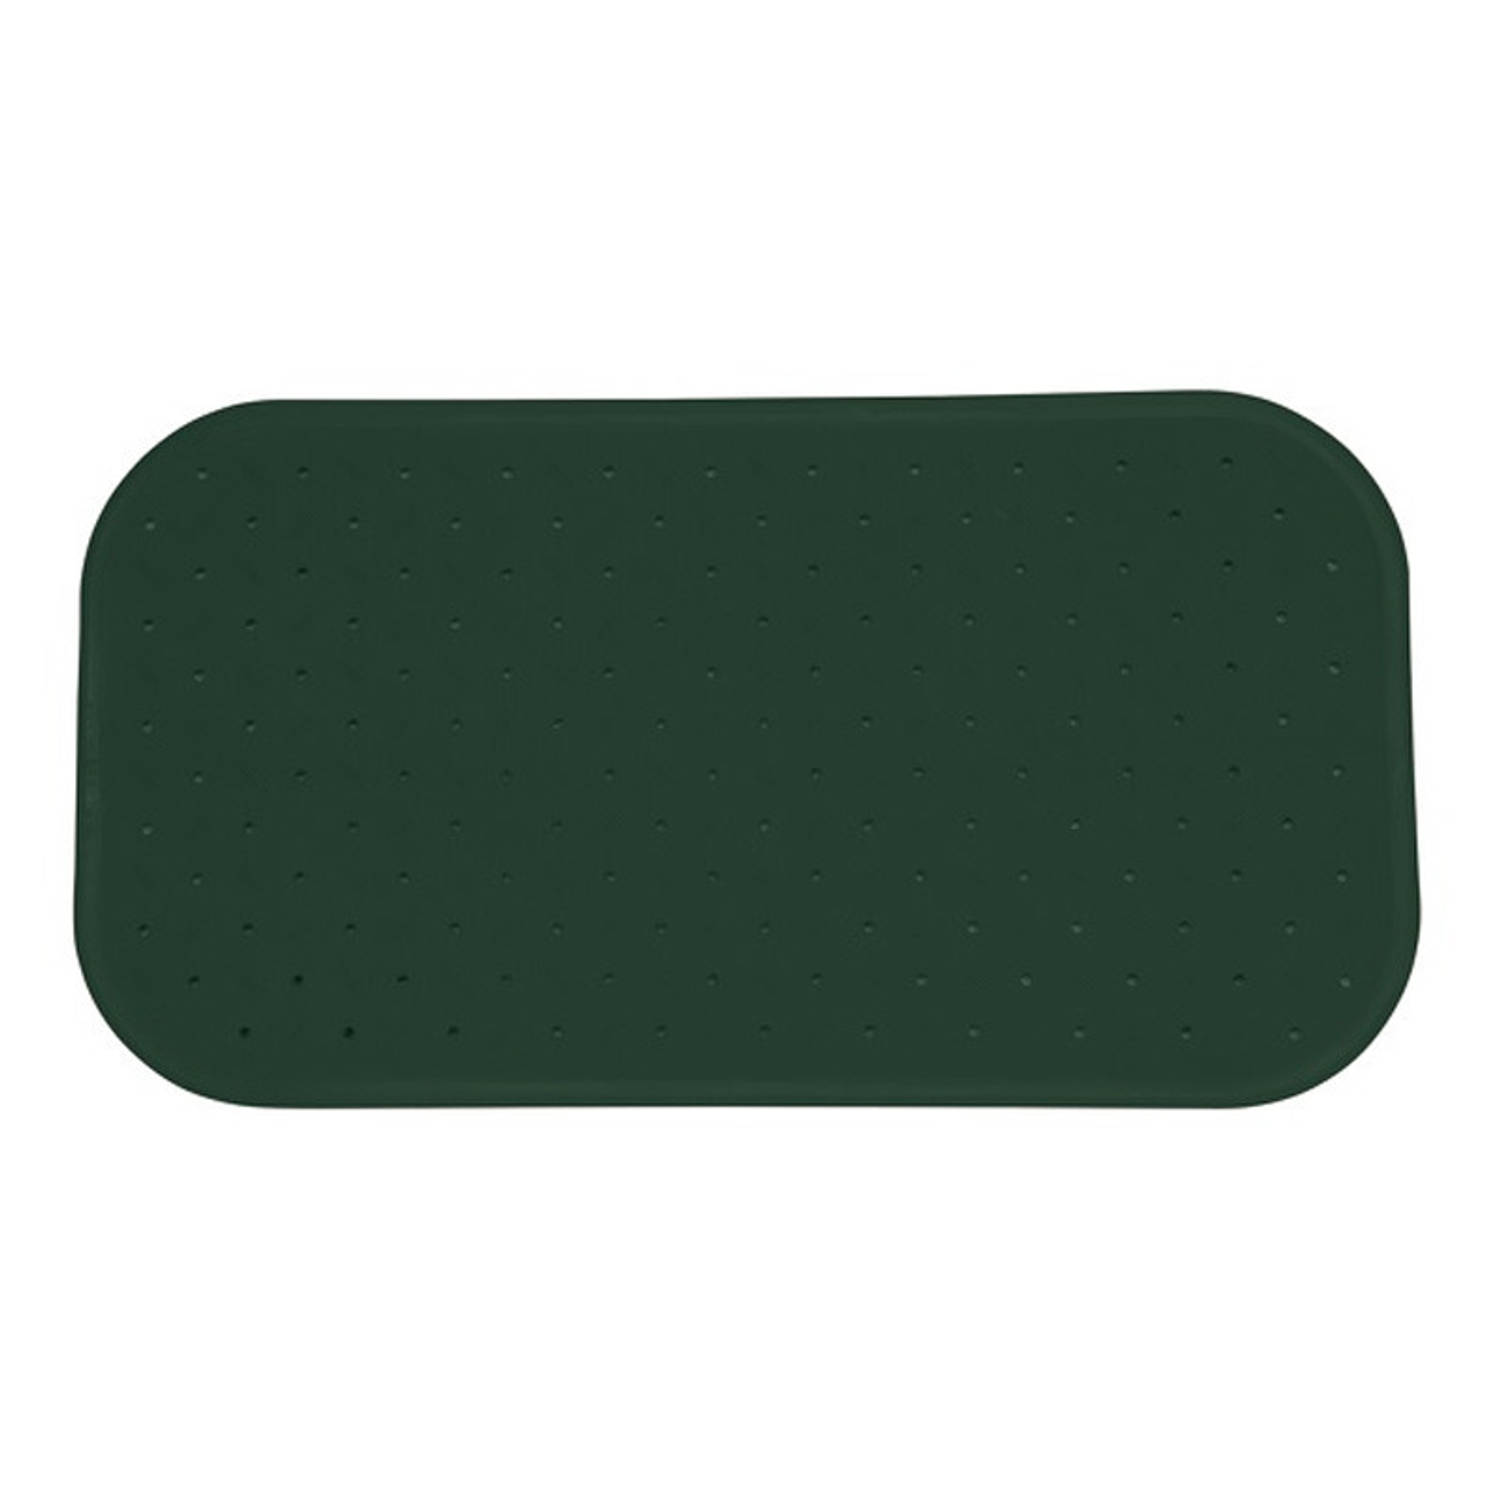 MSV Douche-bad anti-slip mat badkamer rubber groen 36 x 76 cm Badmatjes